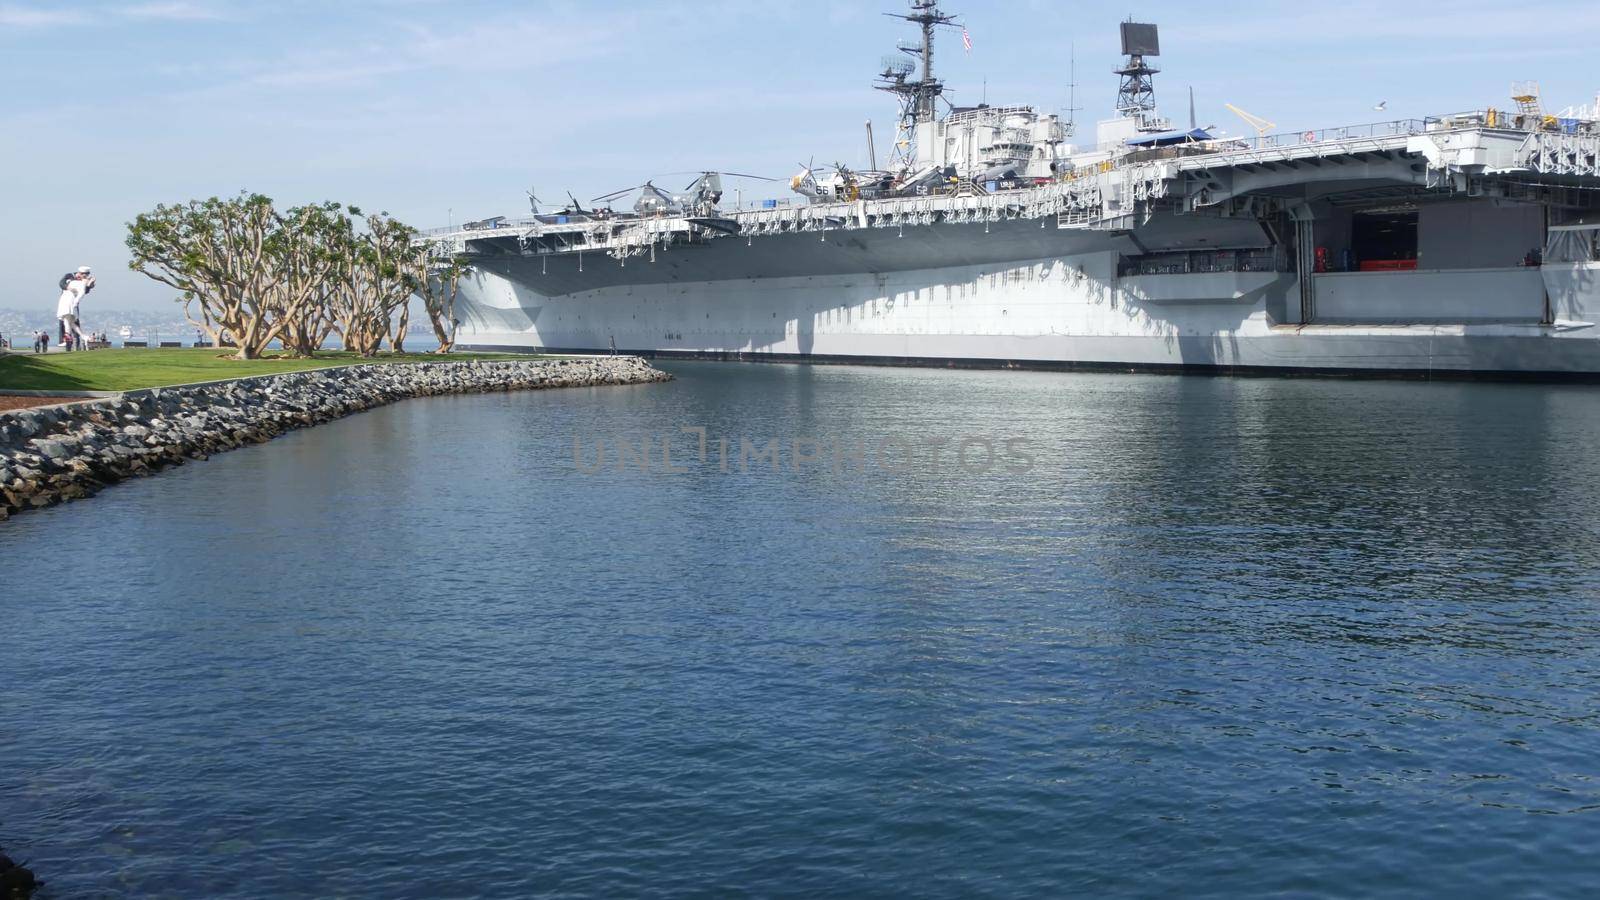 SAN DIEGO, CALIFORNIA USA - 15 JAN 2020: USS Midway military aircraft carrier, historic war ship. Naval army battleship. Maritime warship, legend of navy fleet near Unconditional Surrender Statue by DogoraSun